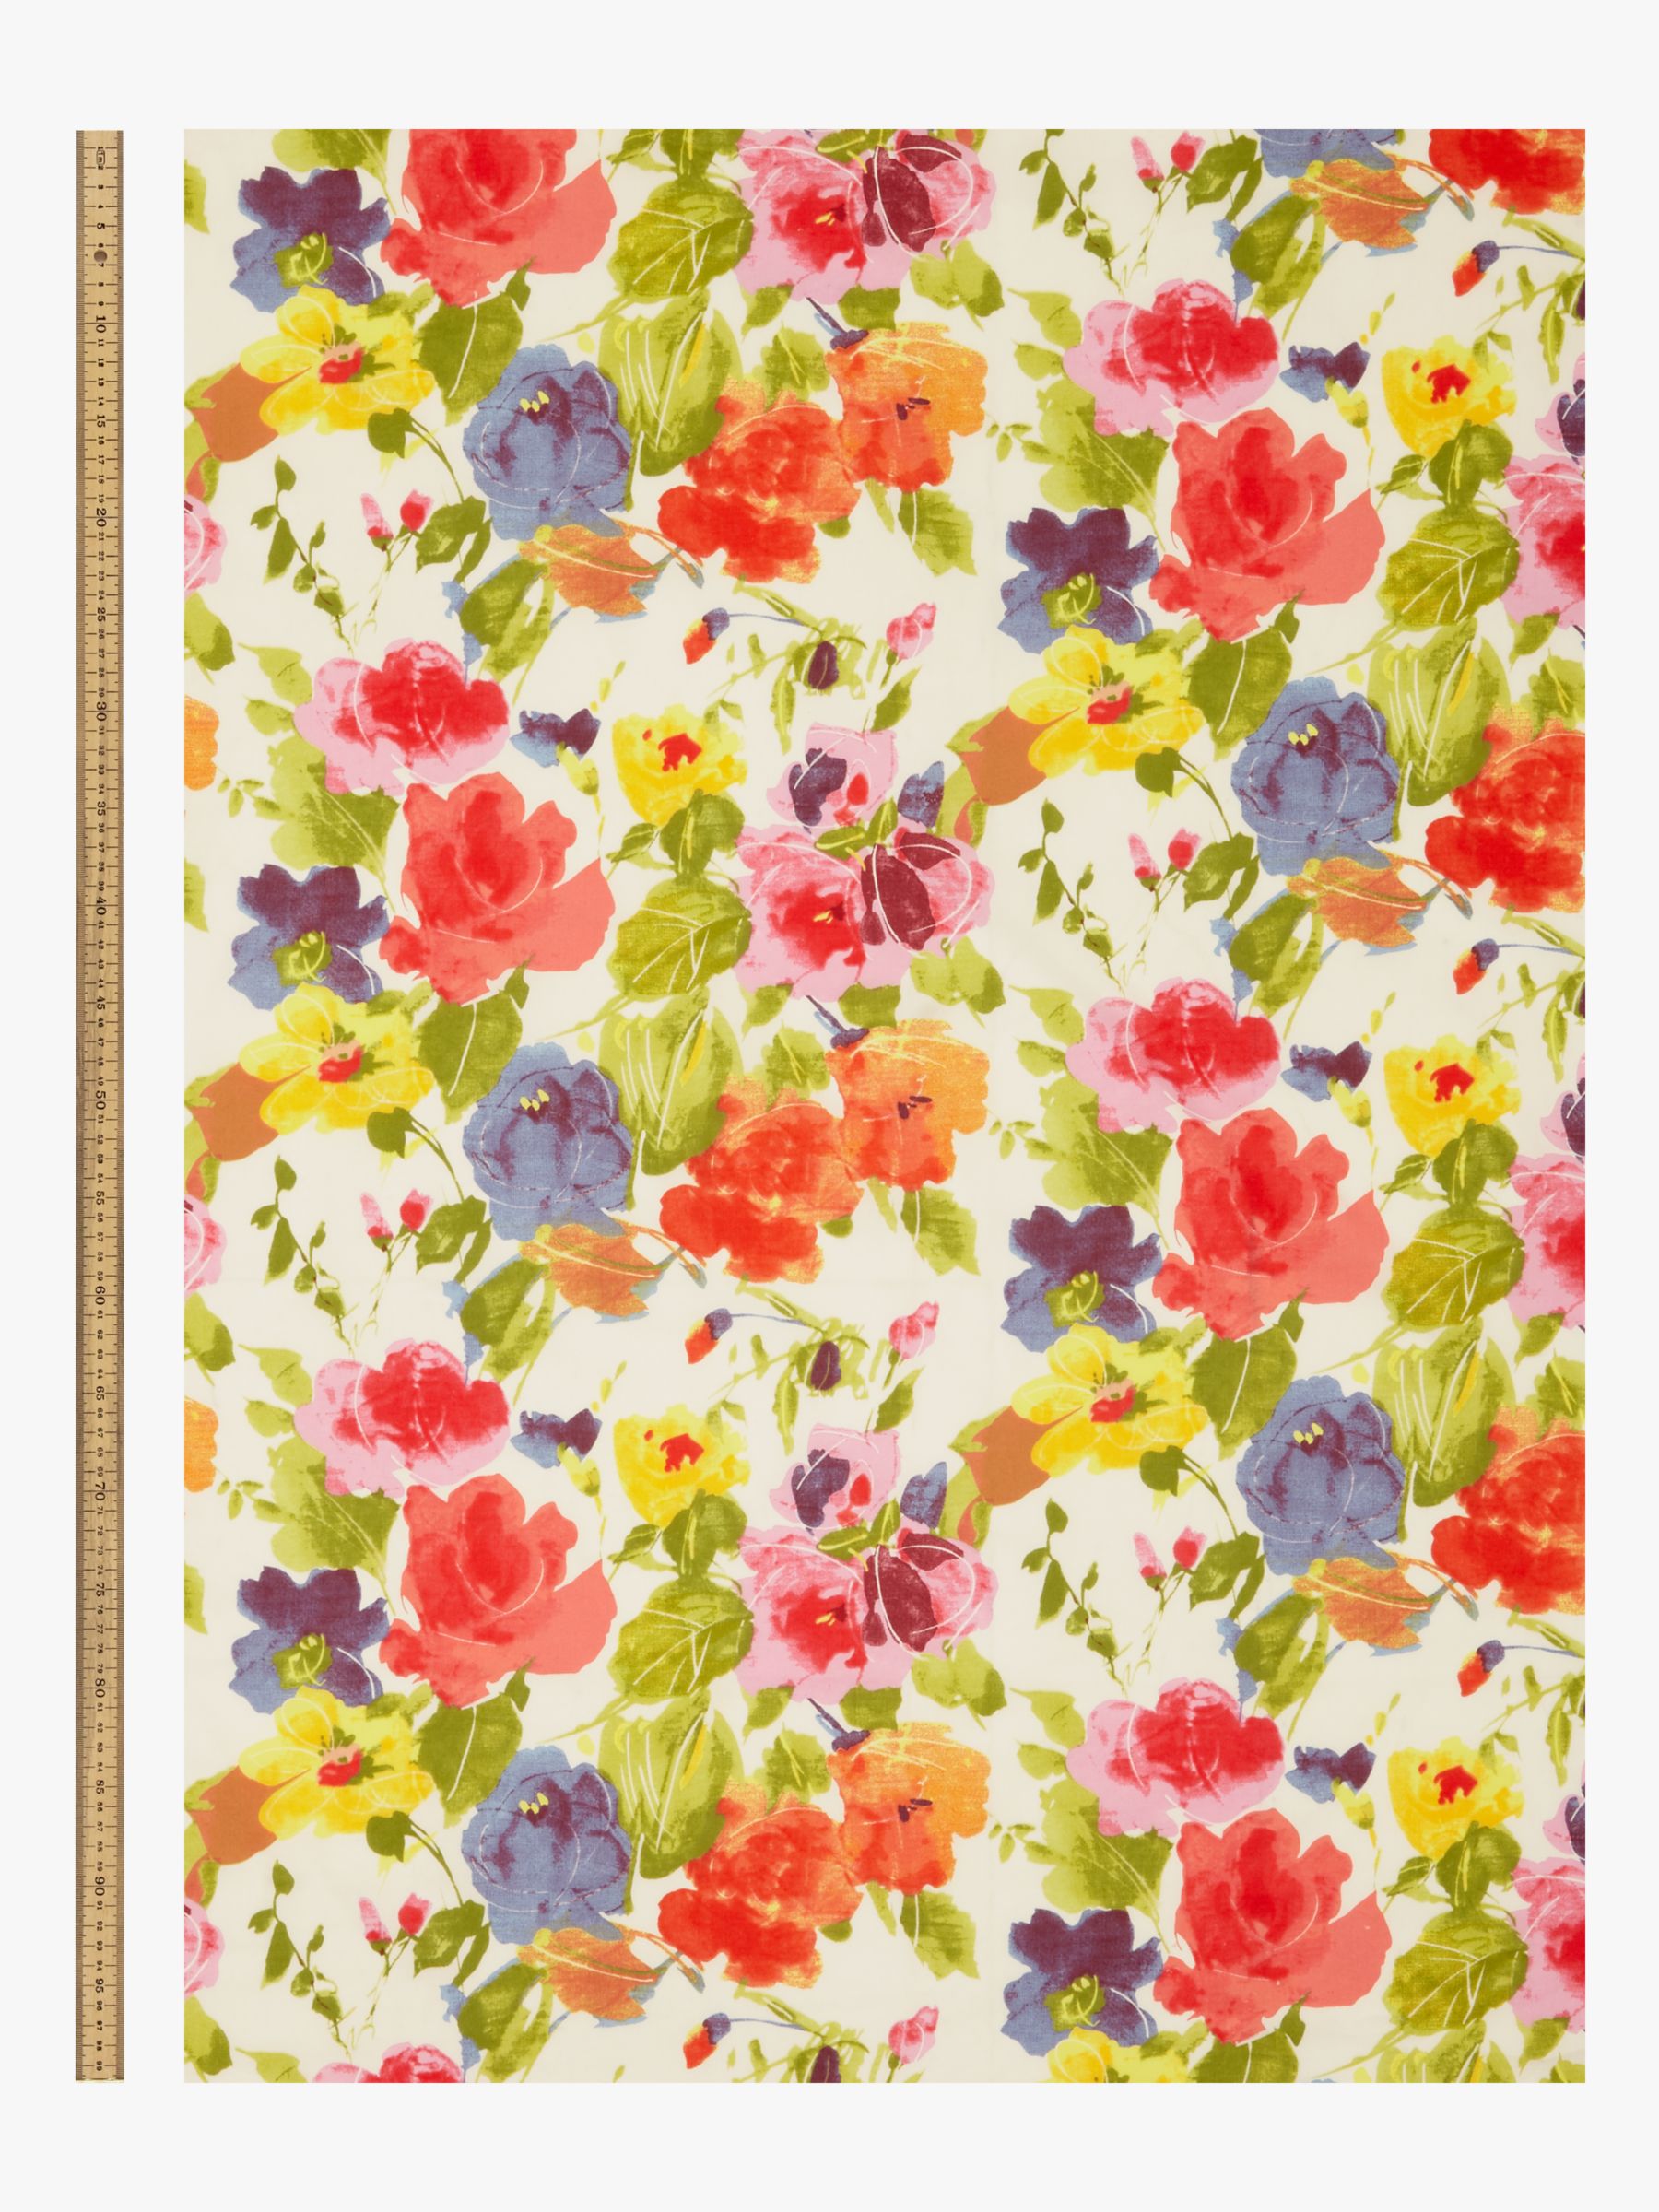 Peter Horton Textiles Large Bright Flowers Cotton Fabric, Multi